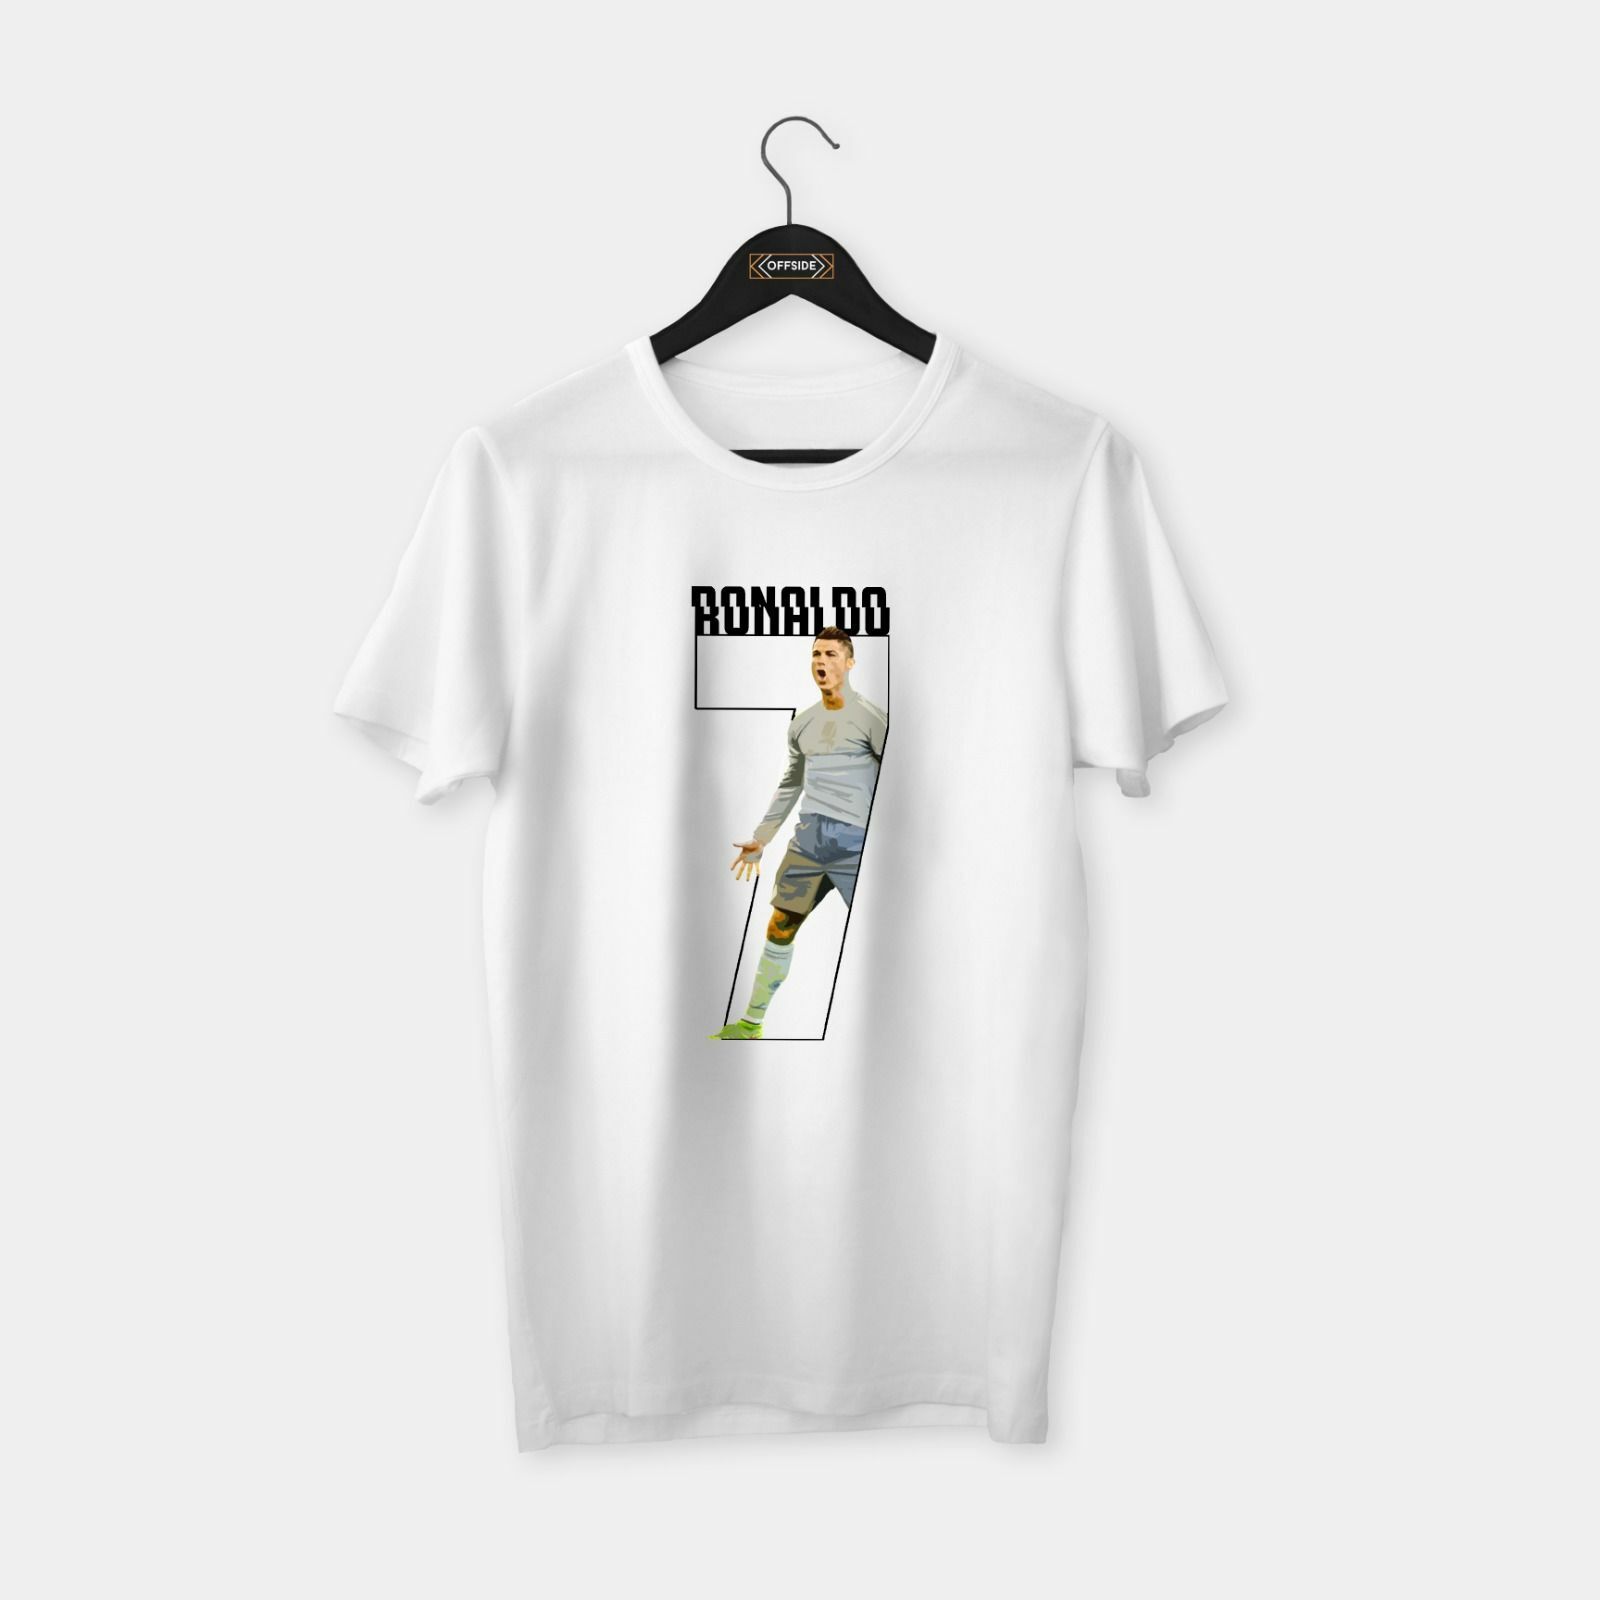 C.Ronaldo T-shirt